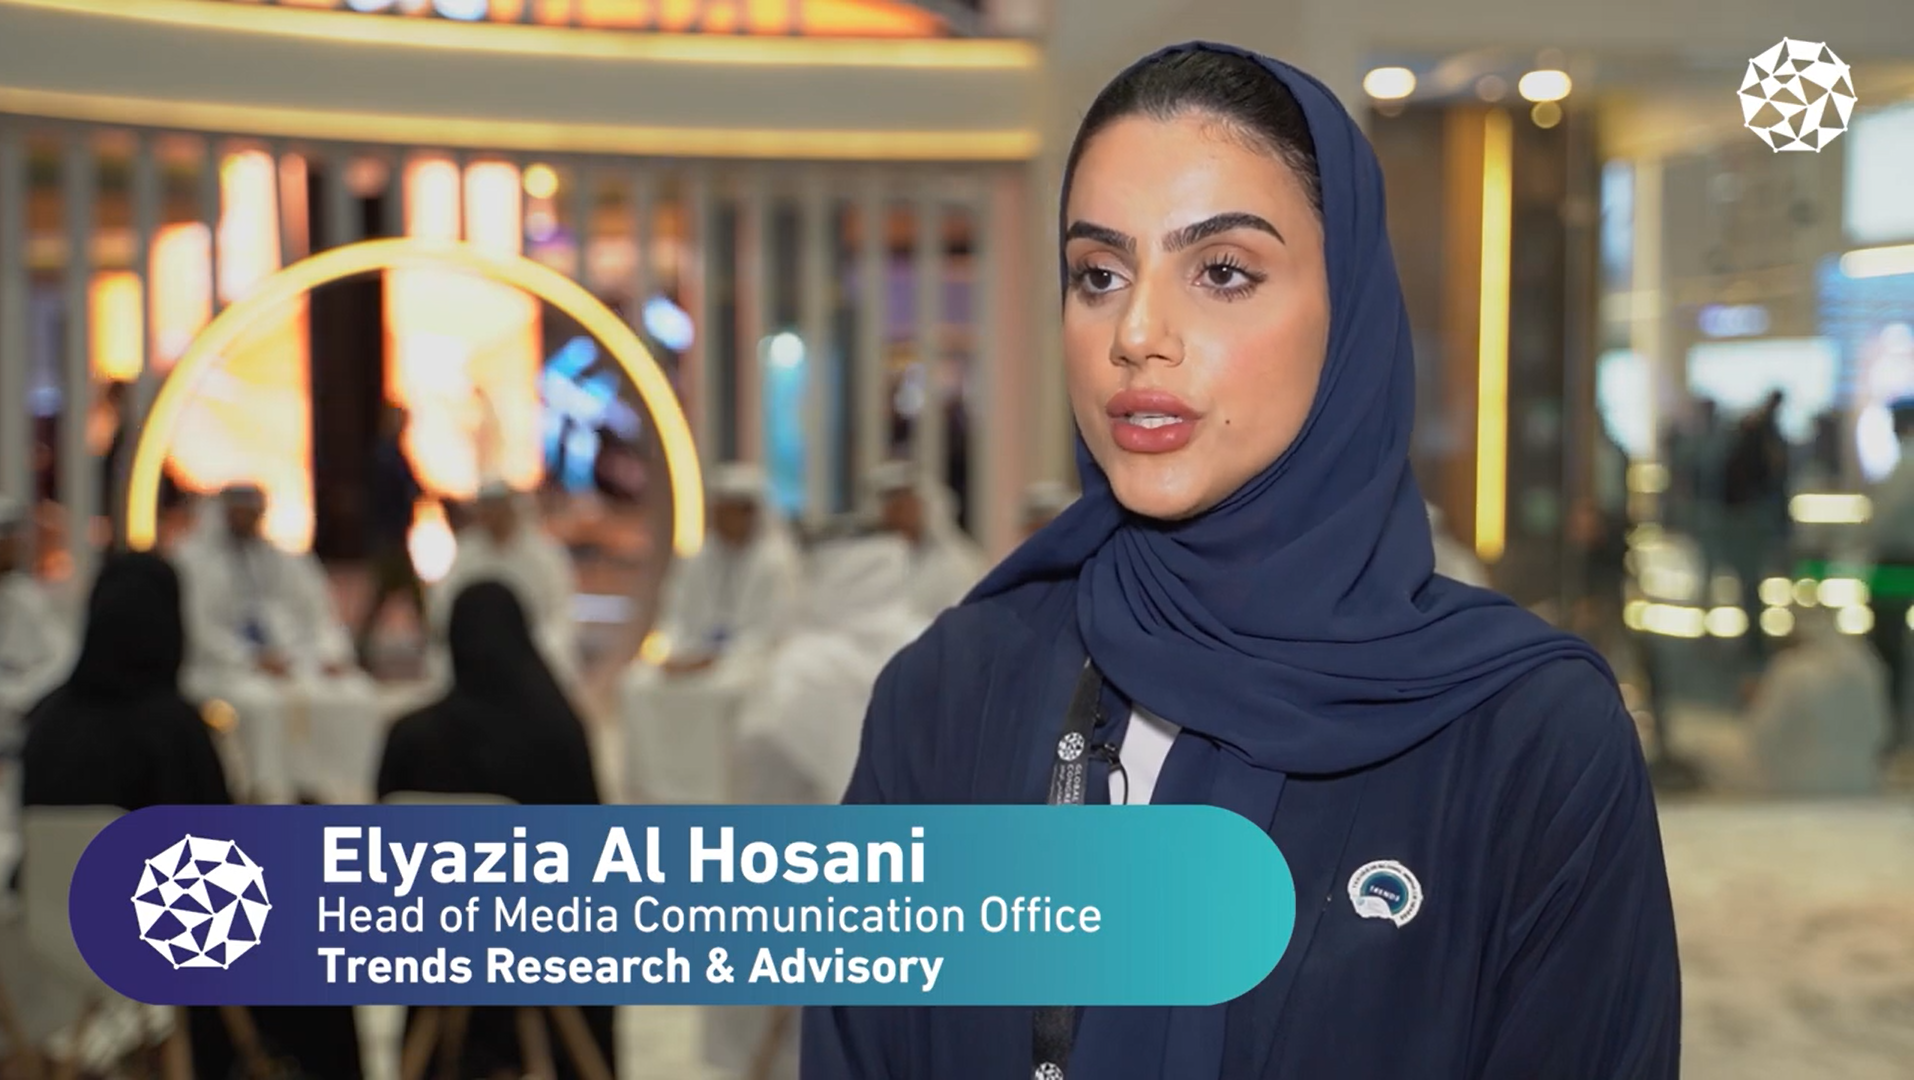 Elyazia Al Hosani, Head of Media Communication Office, Trends Research & Advisory